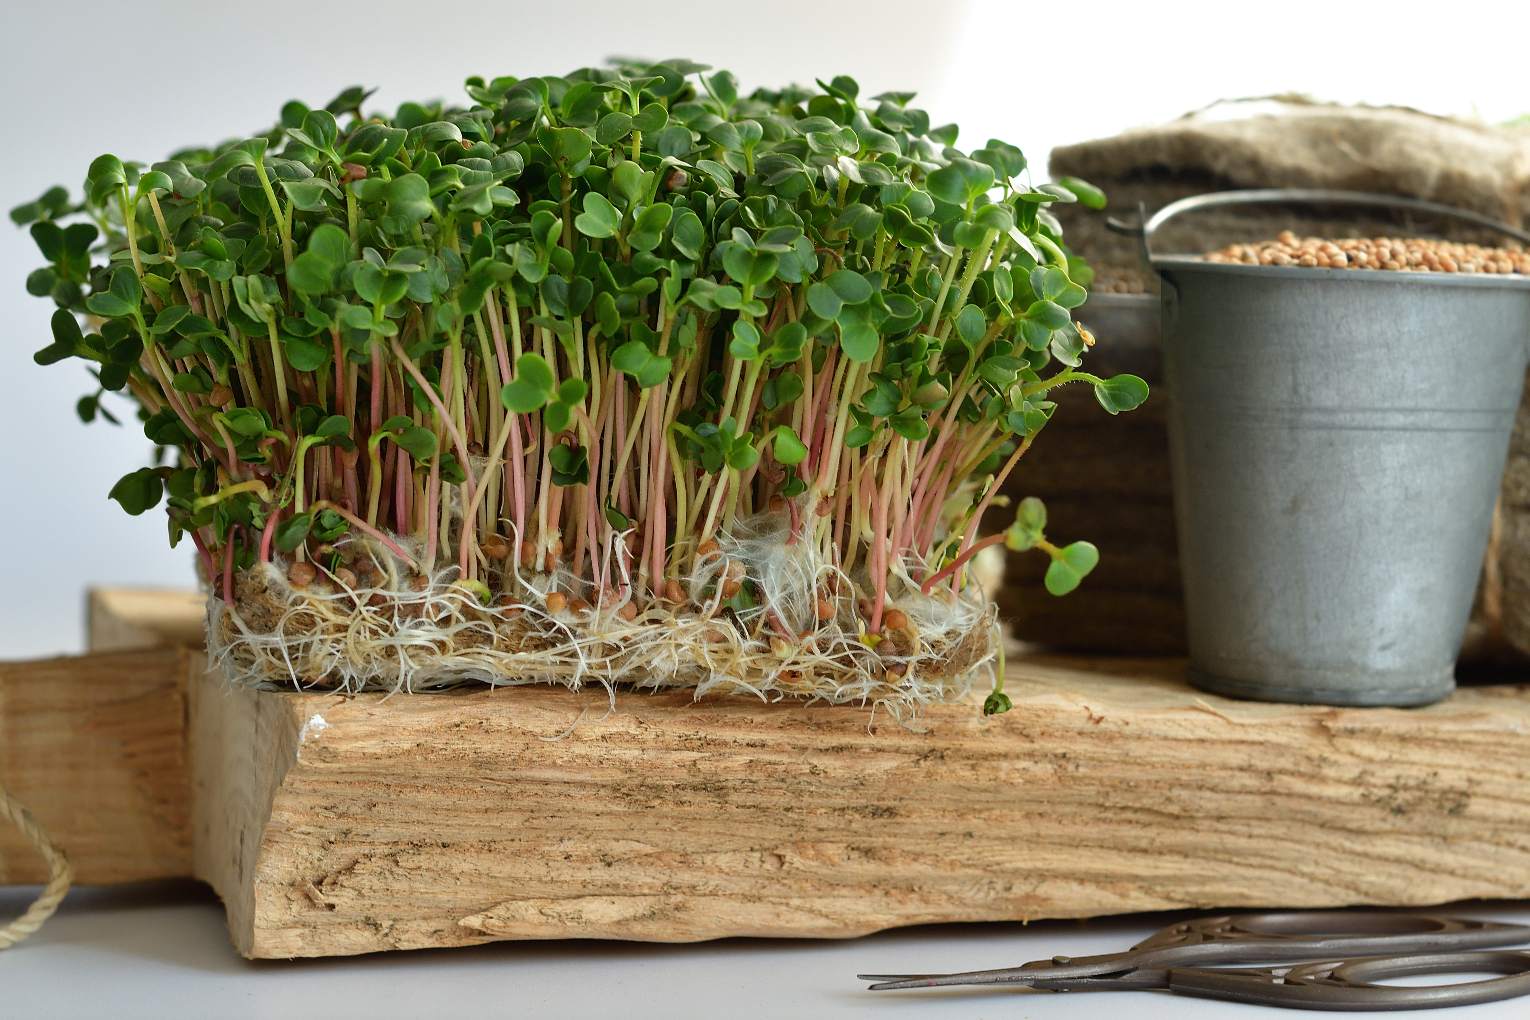 microgreens growing on hemp mats, a metal bucket of organic microgreen seeds on a wooden cutting board